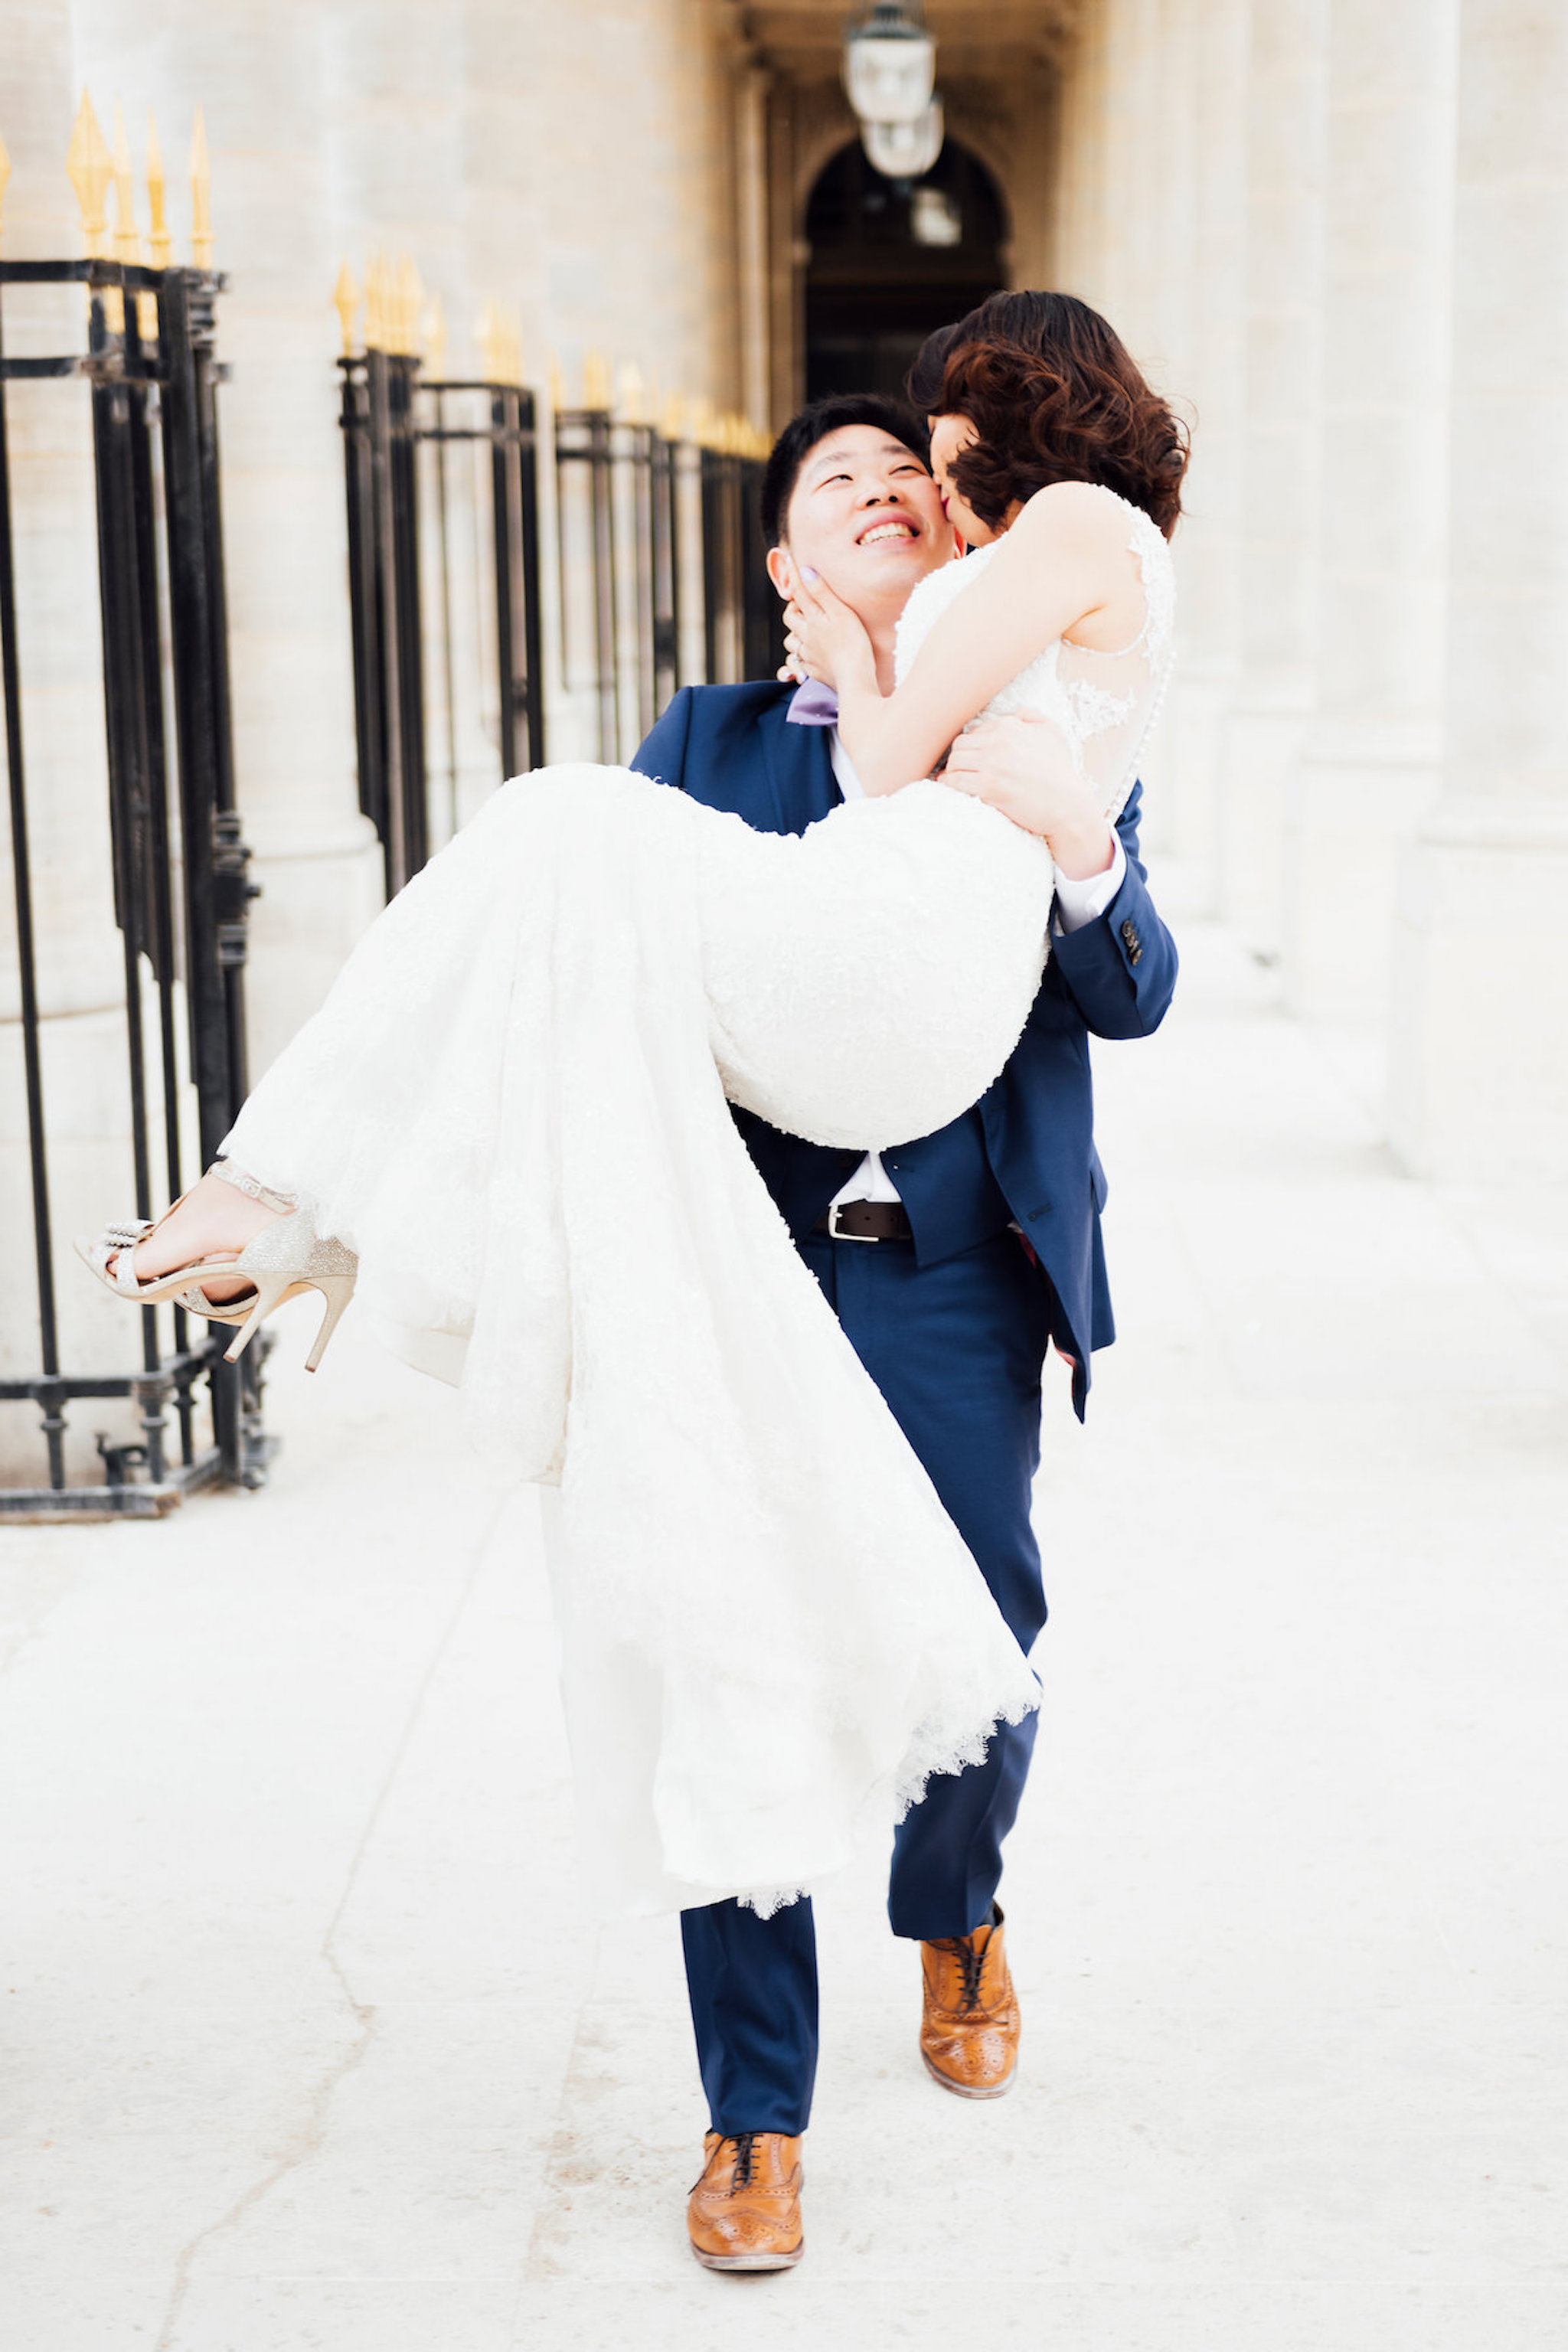 Intimate Paris Wedding-Elopement - Katie Mitchell Photography -- Wedding Blog - The Overwhelmed Bride